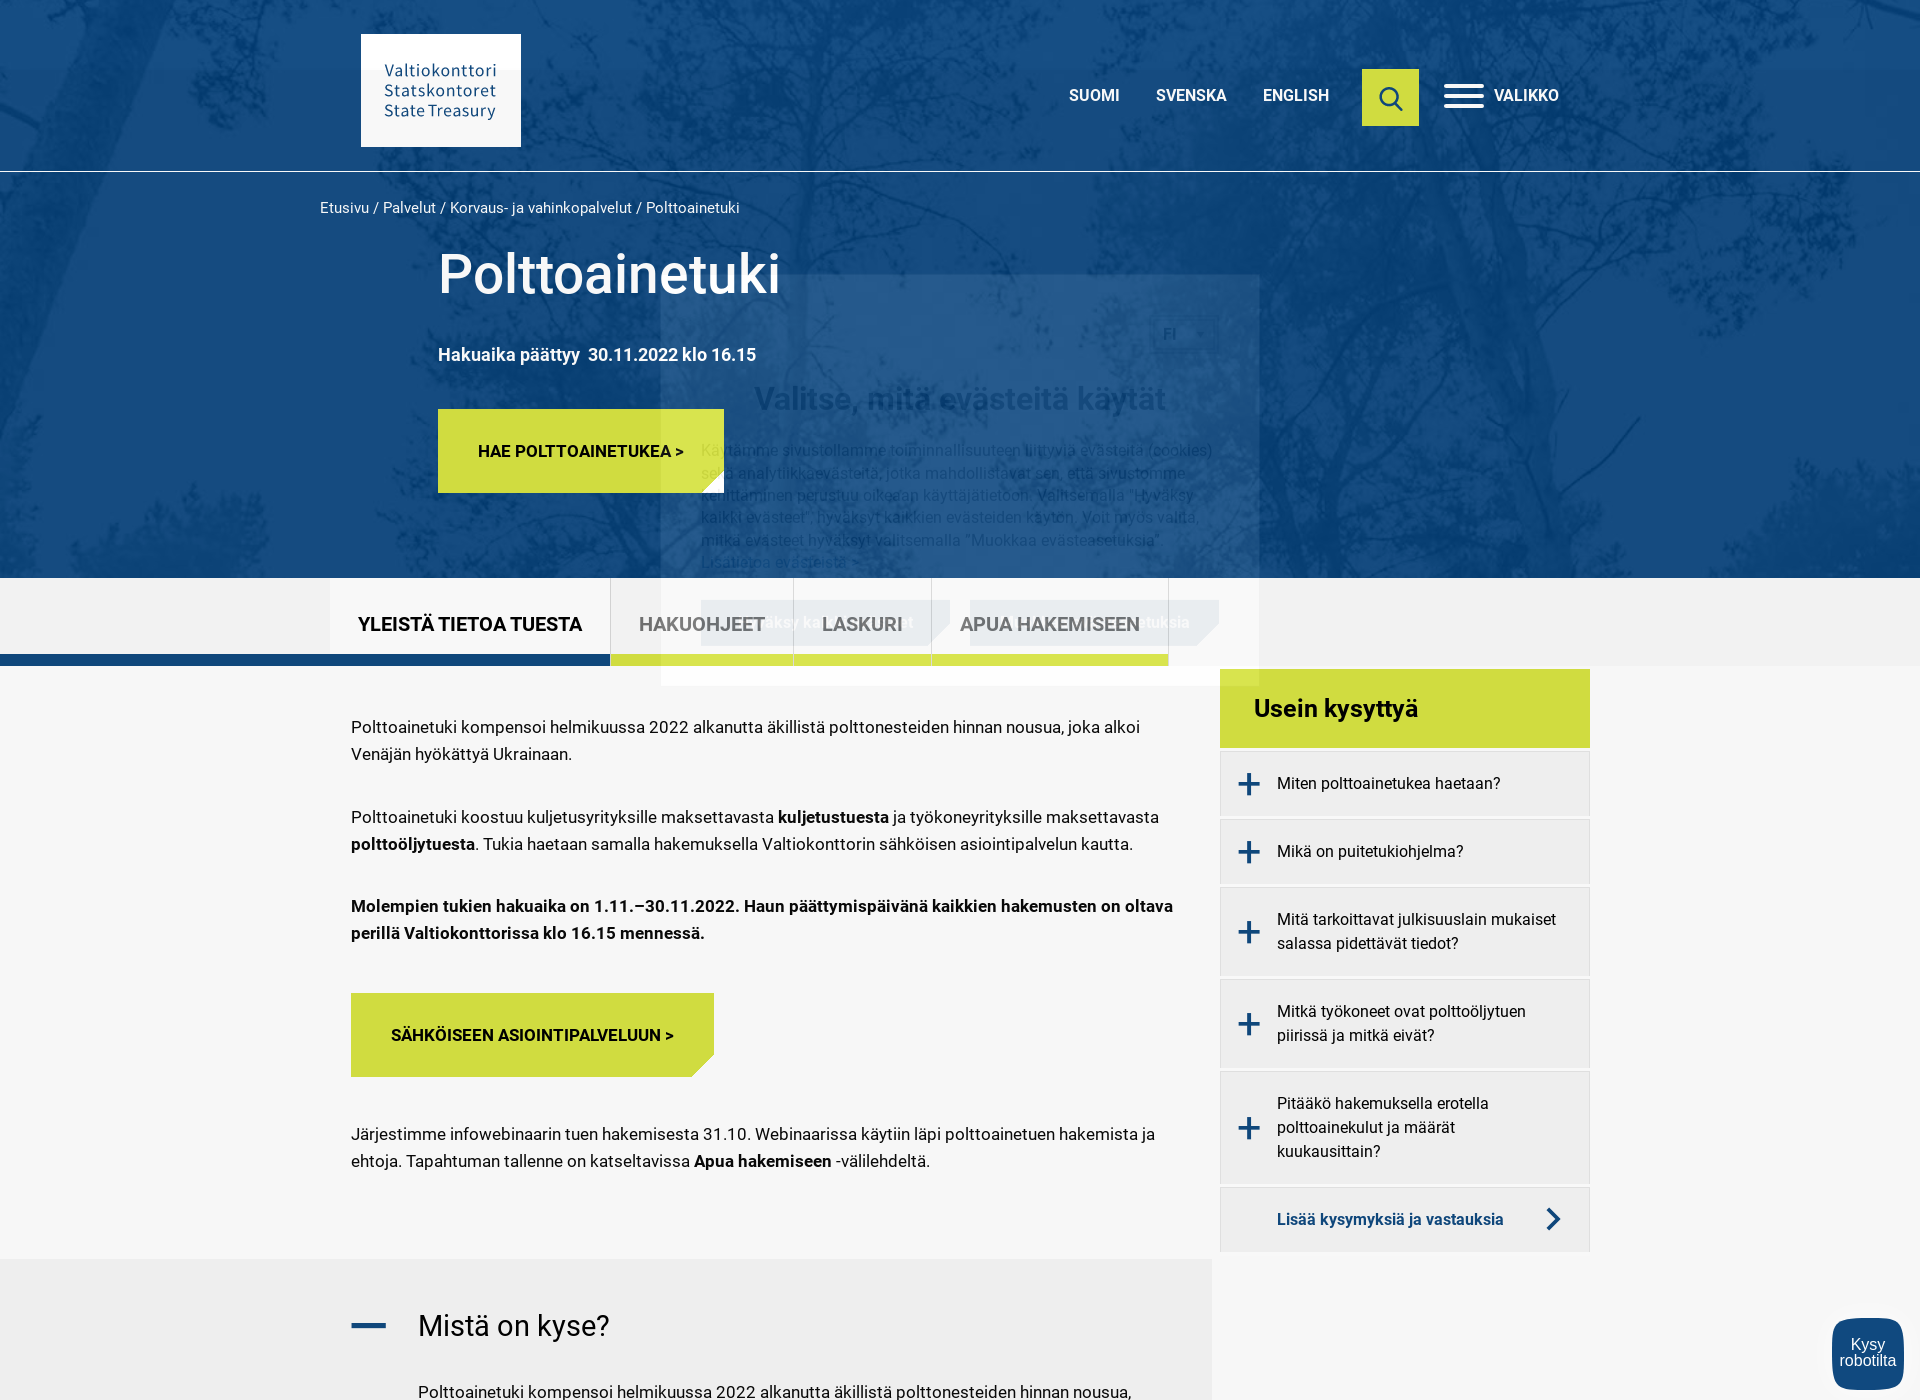 Skärmdump för haepolttoainetukea.fi